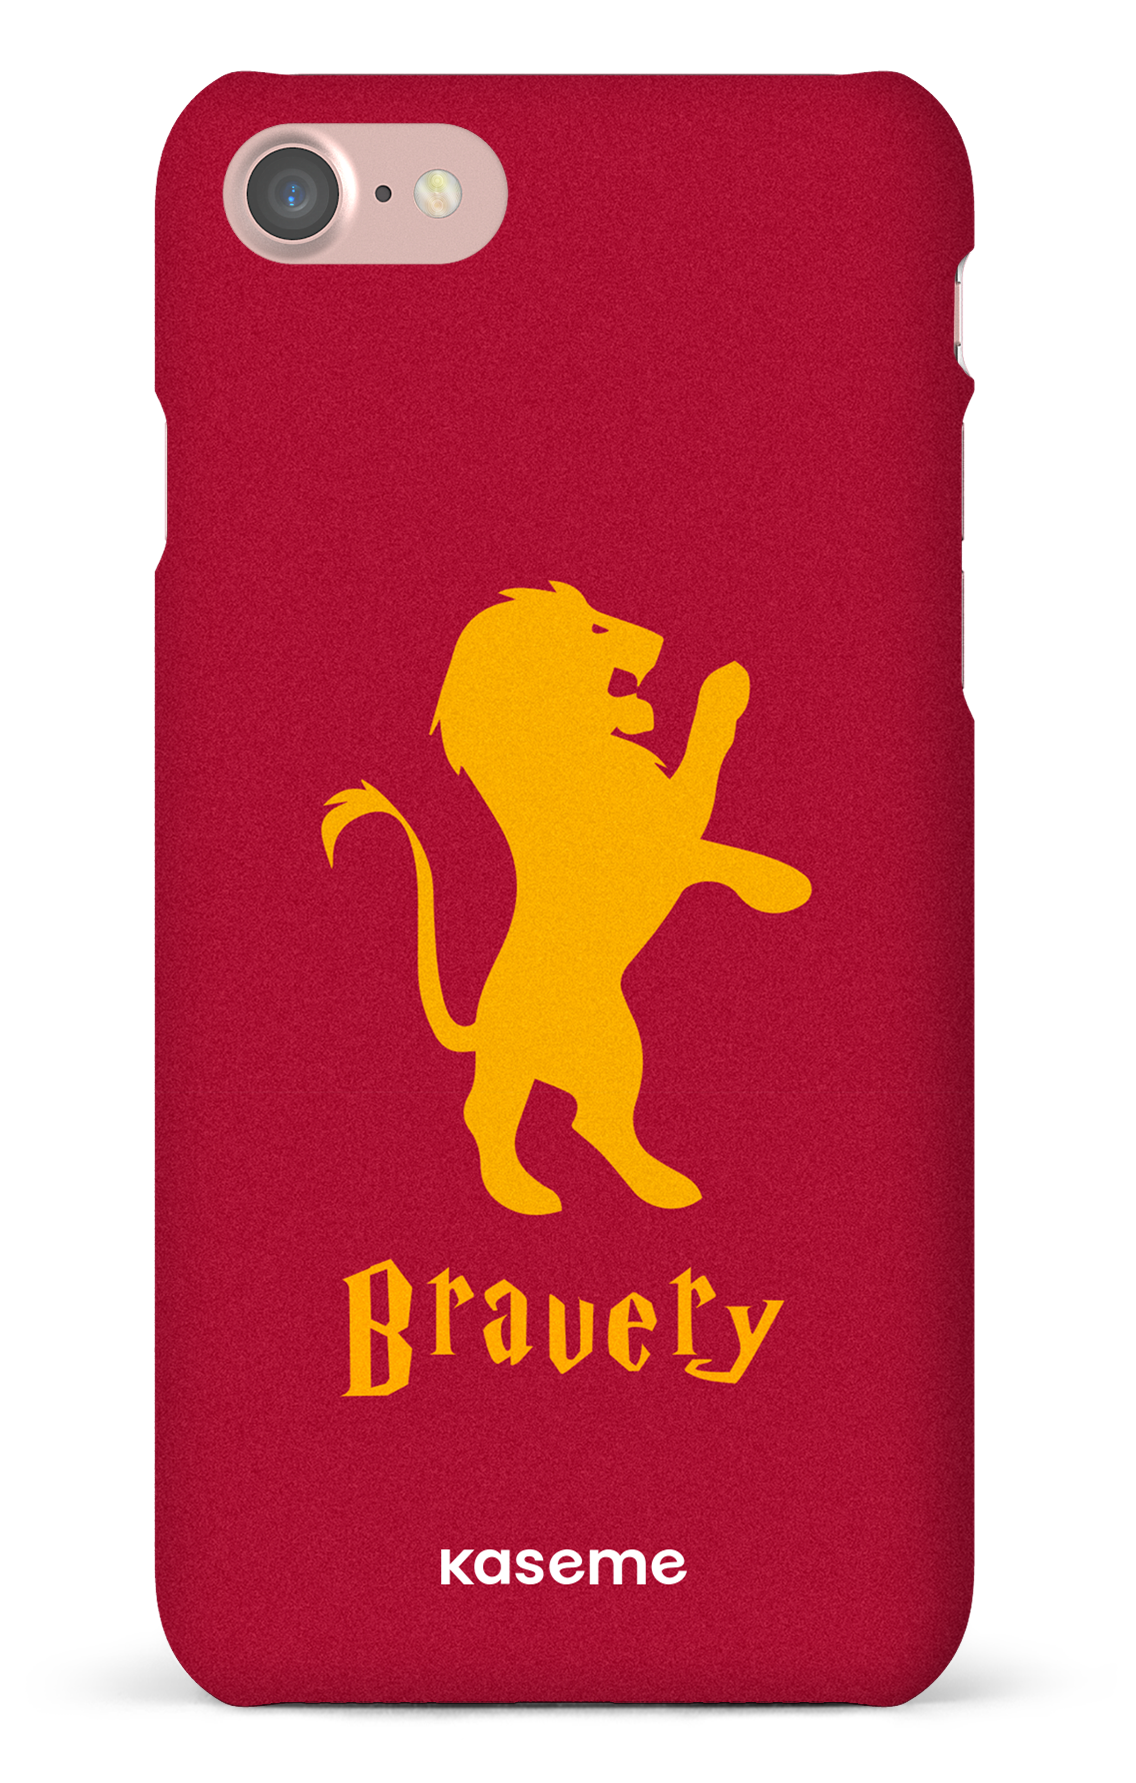 Bravery - iPhone 7